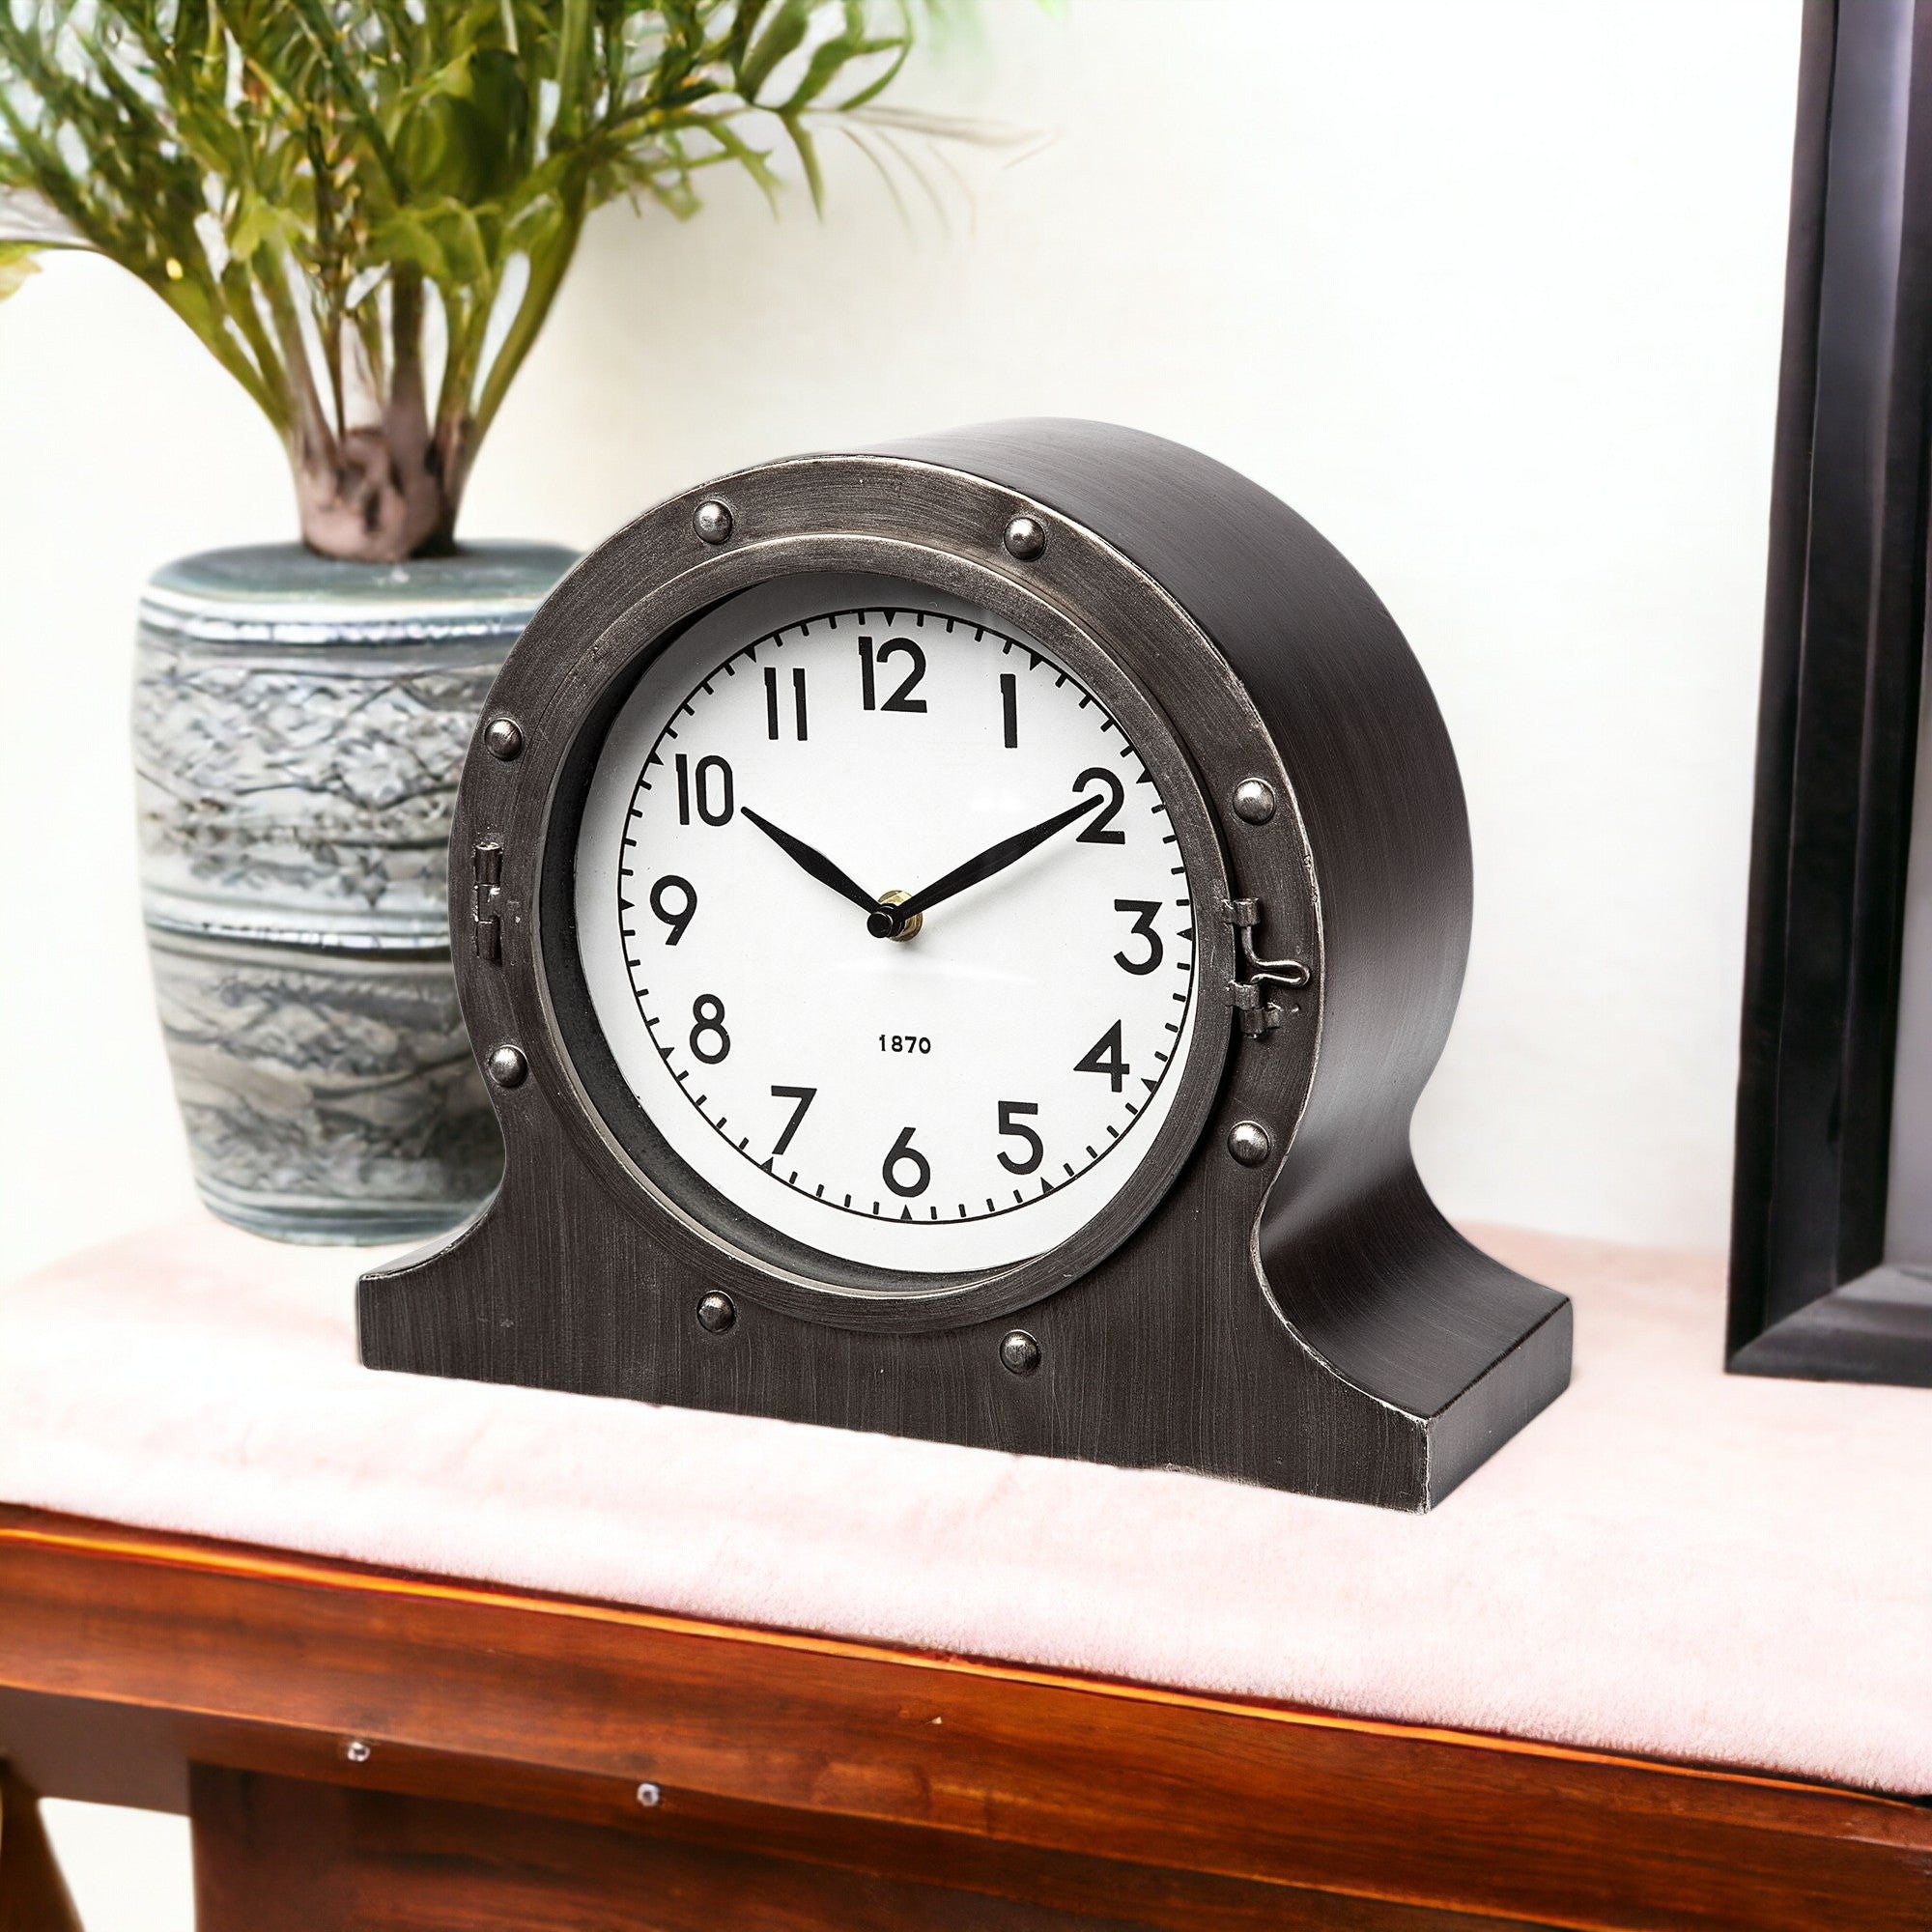 Rustic Brown Metal Porthole Desk  Table Clock